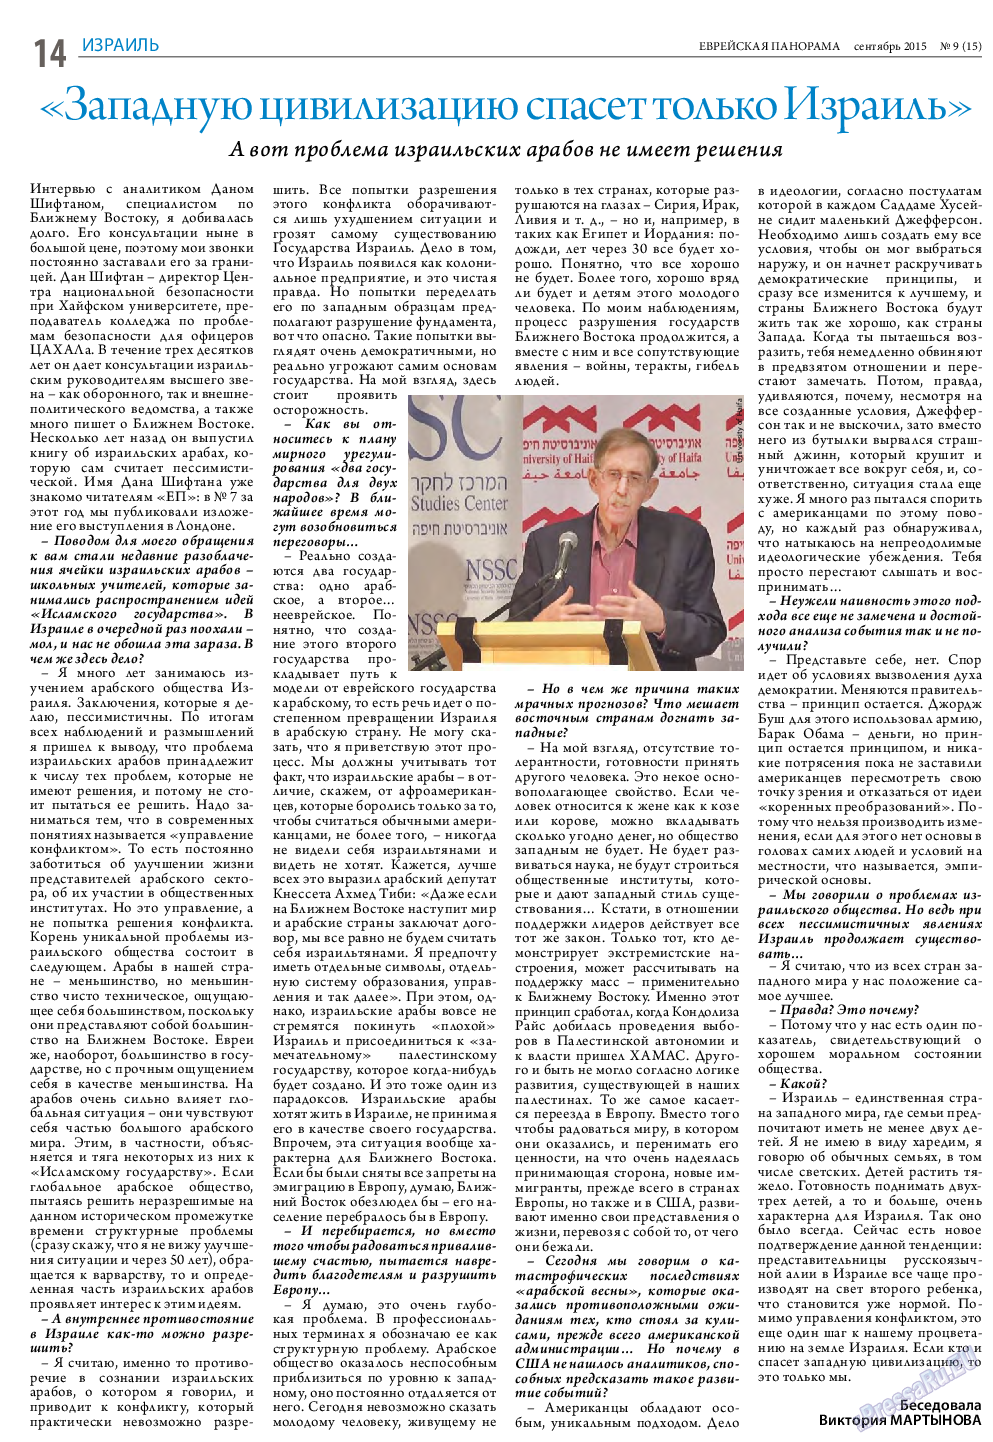 Еврейская панорама, газета. 2015 №9 стр.14